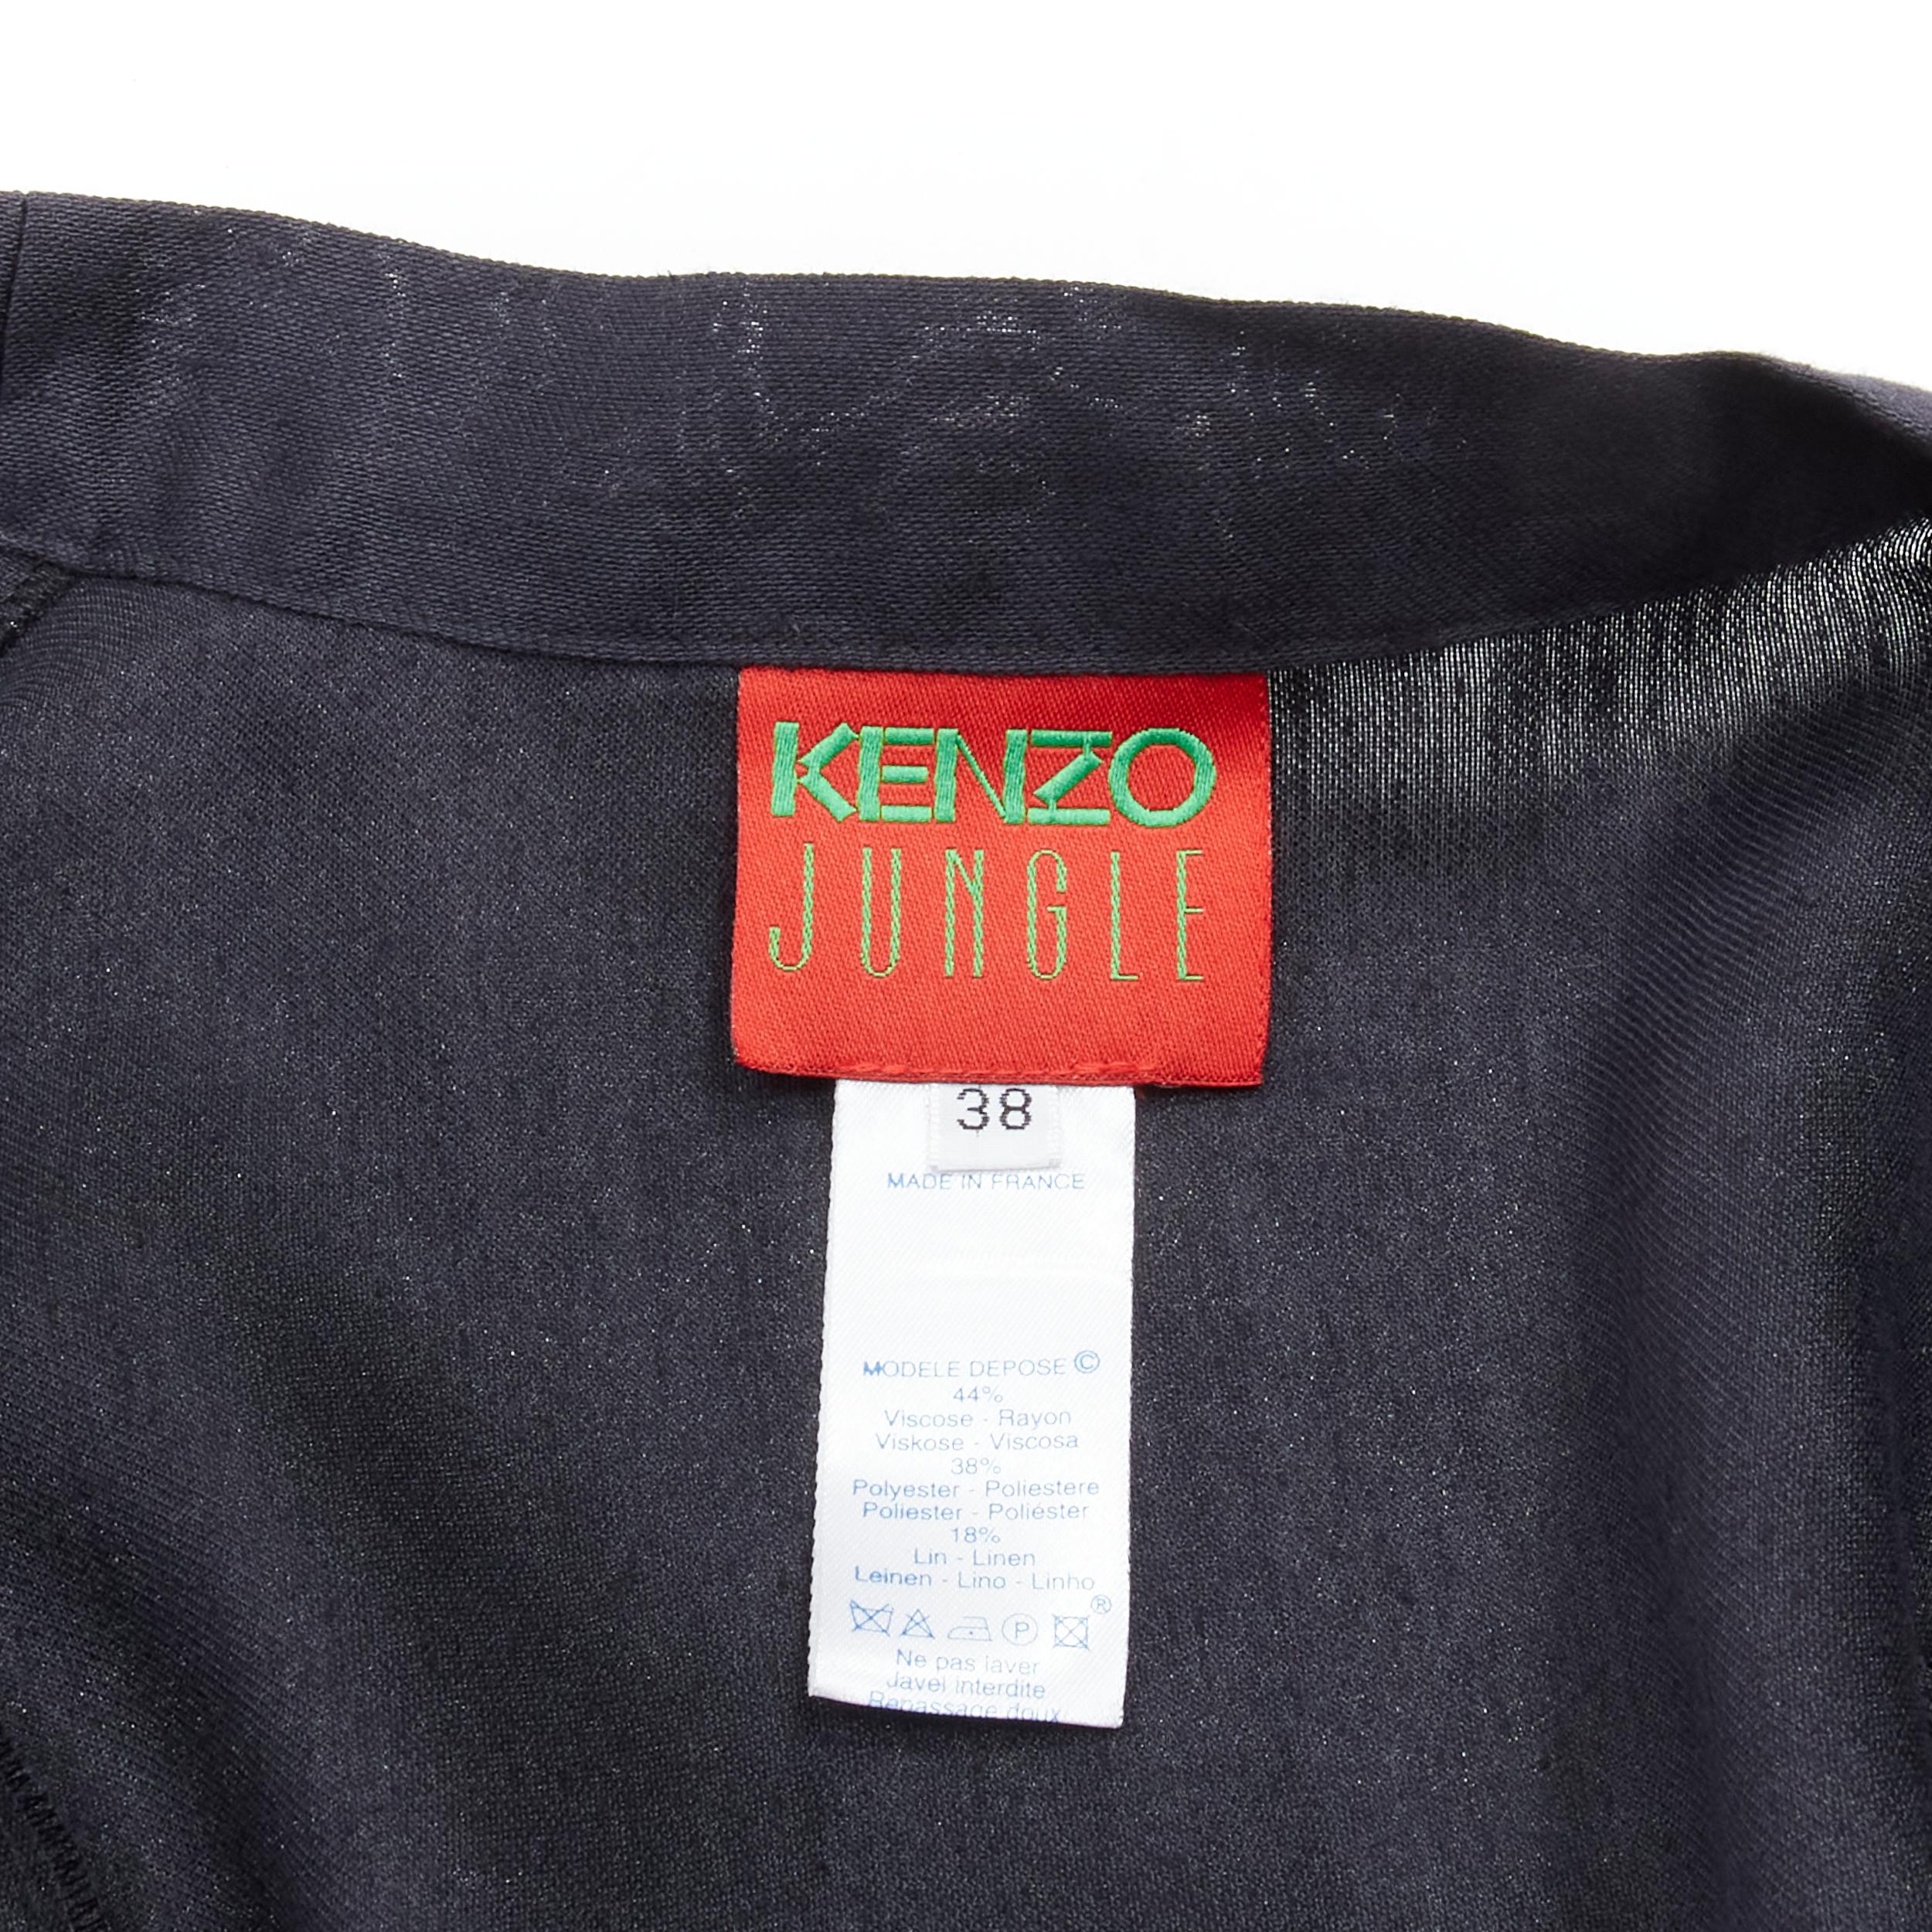 KENZO JUNGLE Vintage black linen sheer degrade damask kimono jacket FR38 S For Sale 5